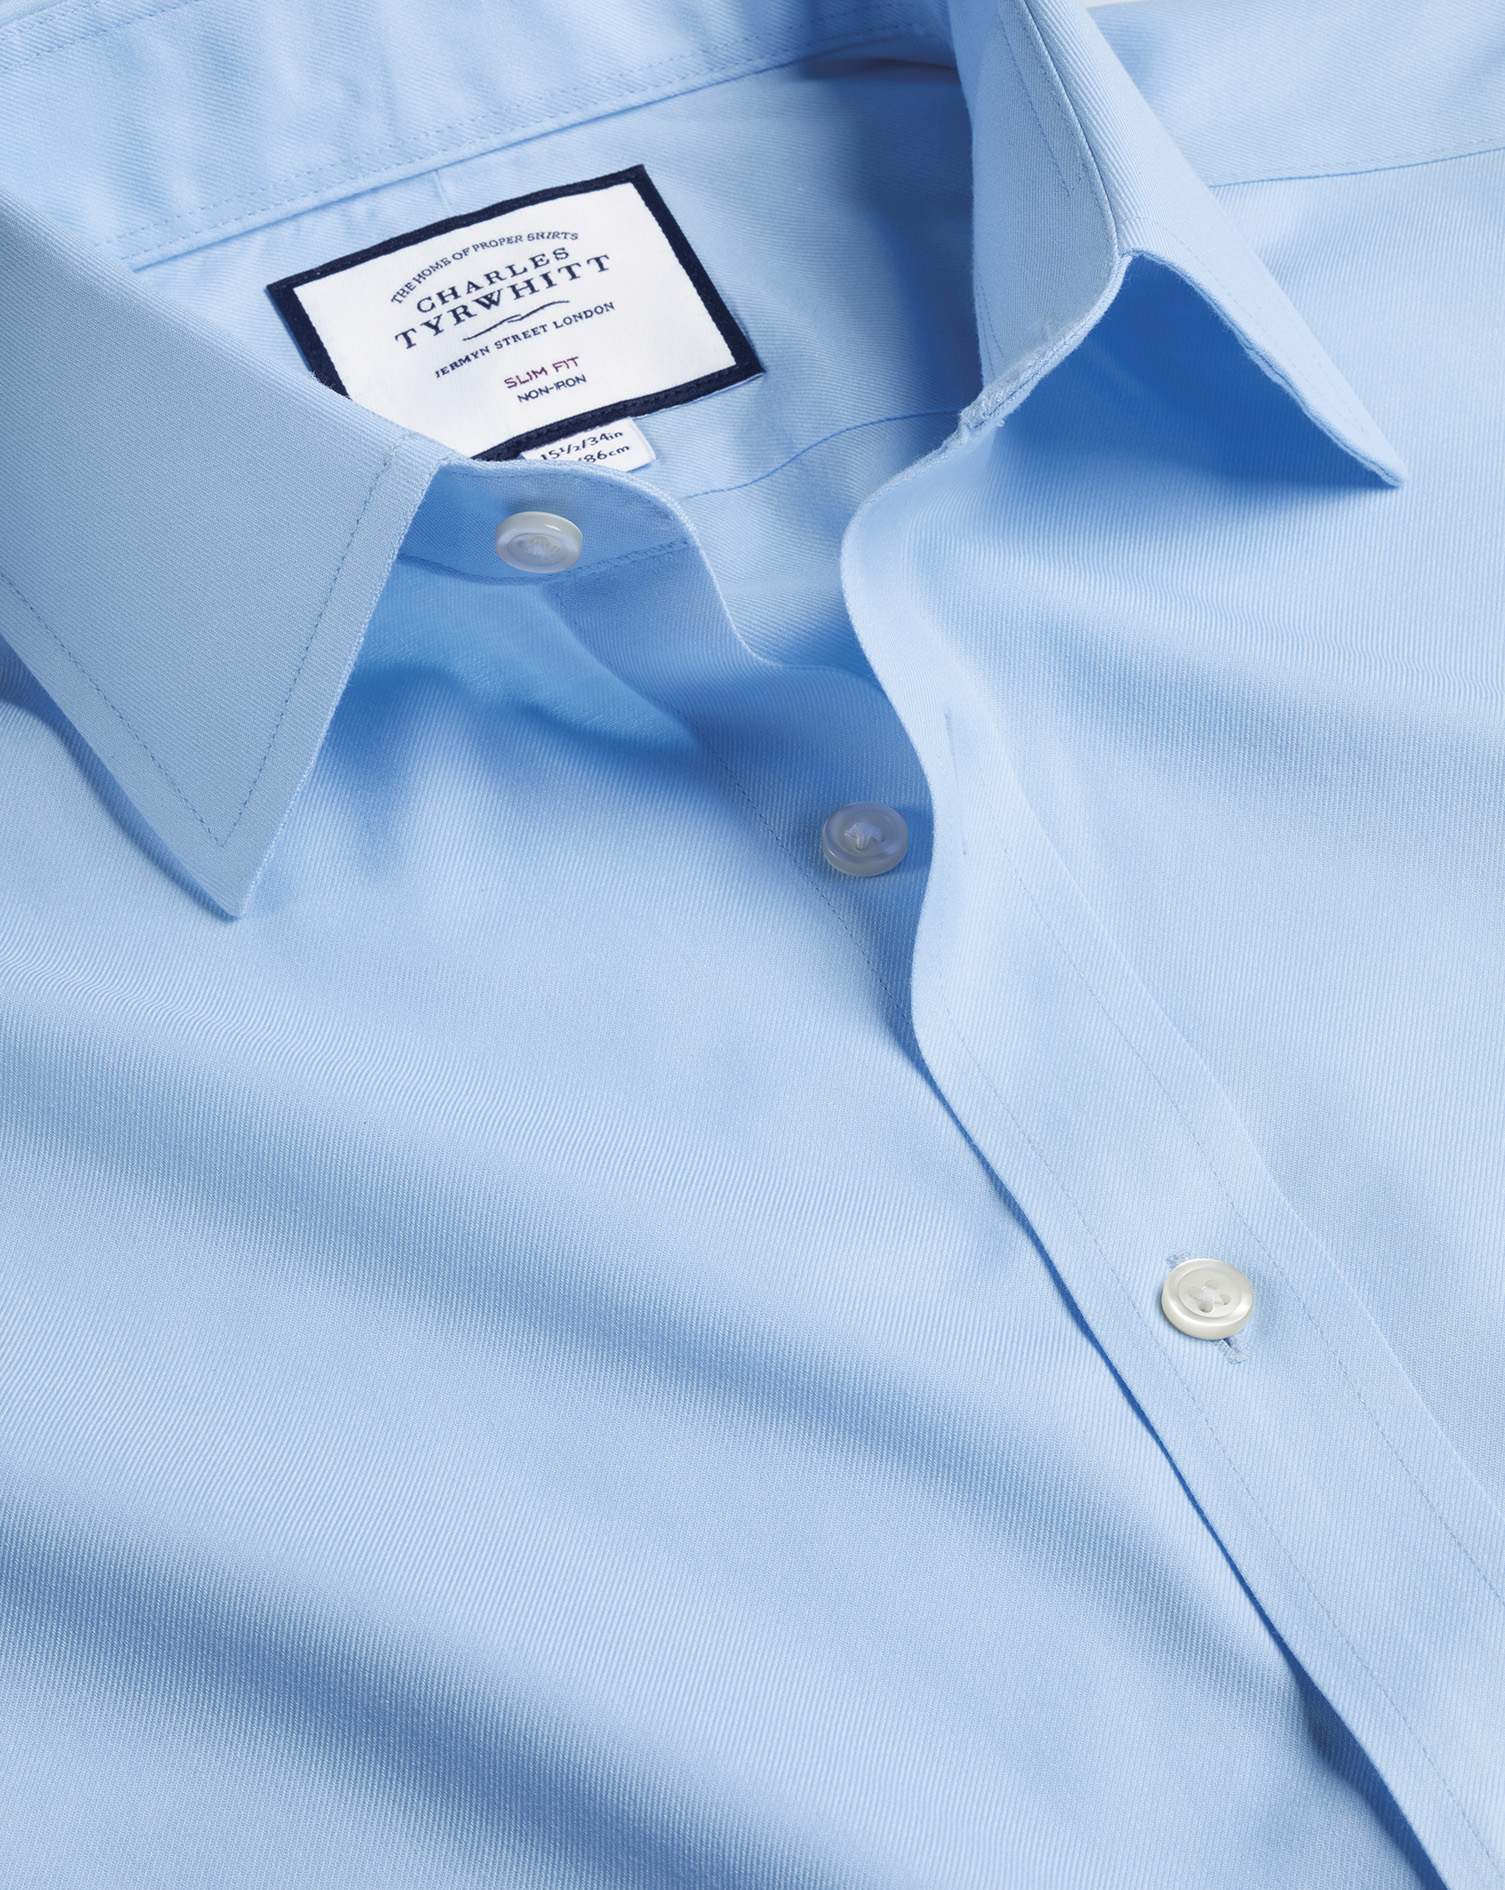 Men's Charles Tyrwhitt Non-Iron Twill Dress Shirt - Sky Blue French Cuff Size XXXL Cotton
